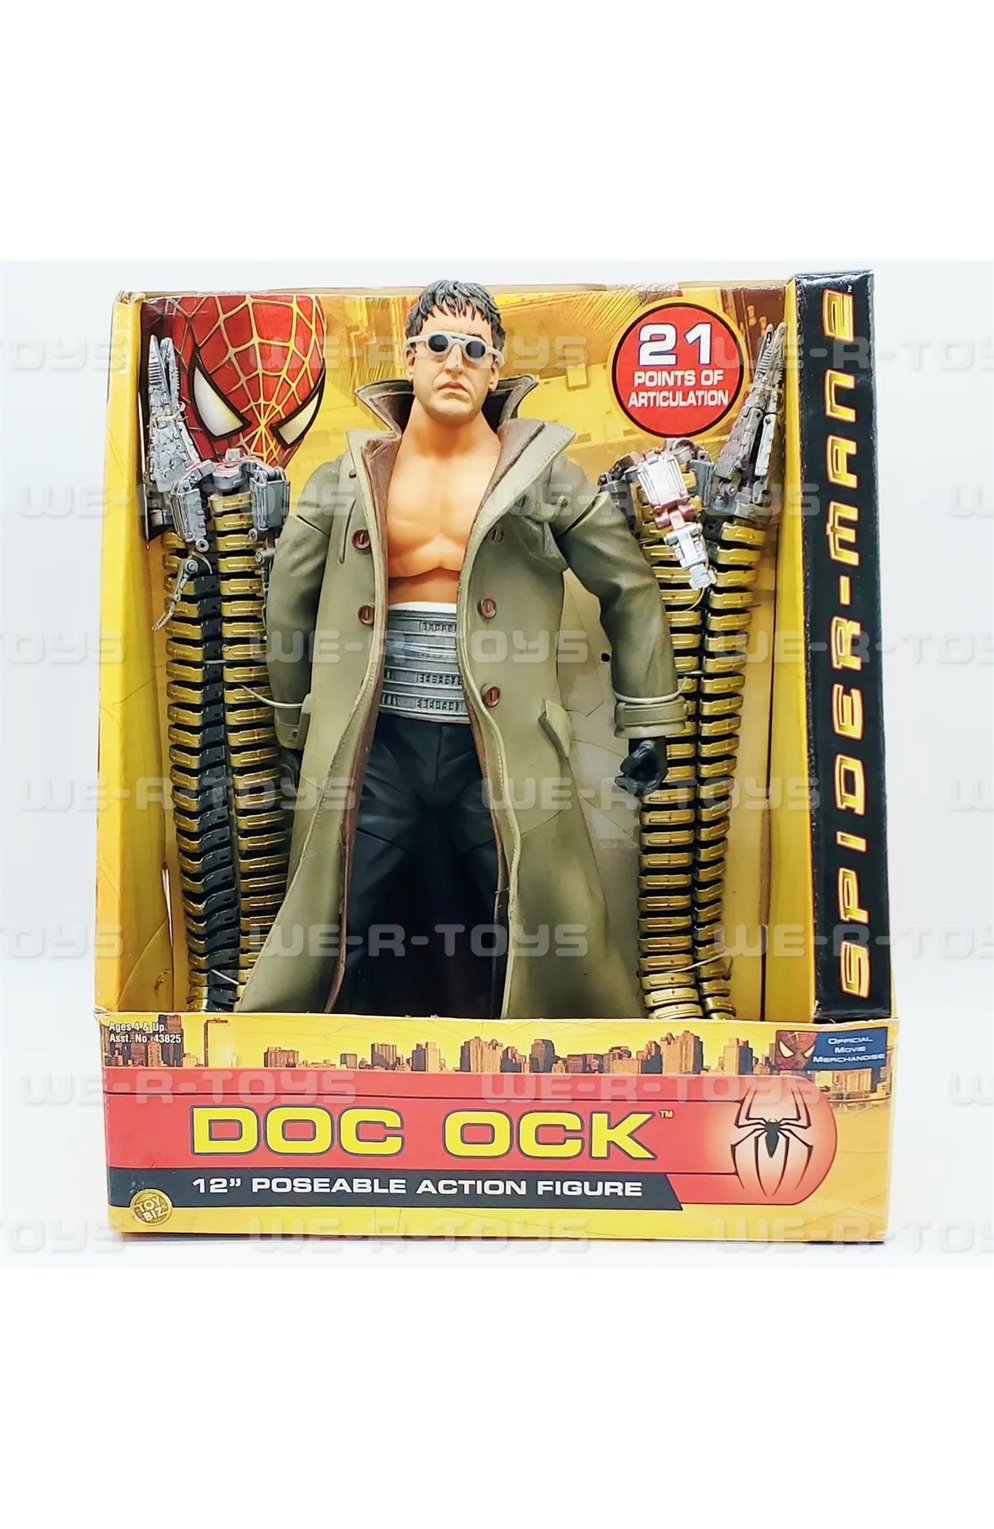 Toy Biz 2004 Doc Ock 12" Poseable Action Figure